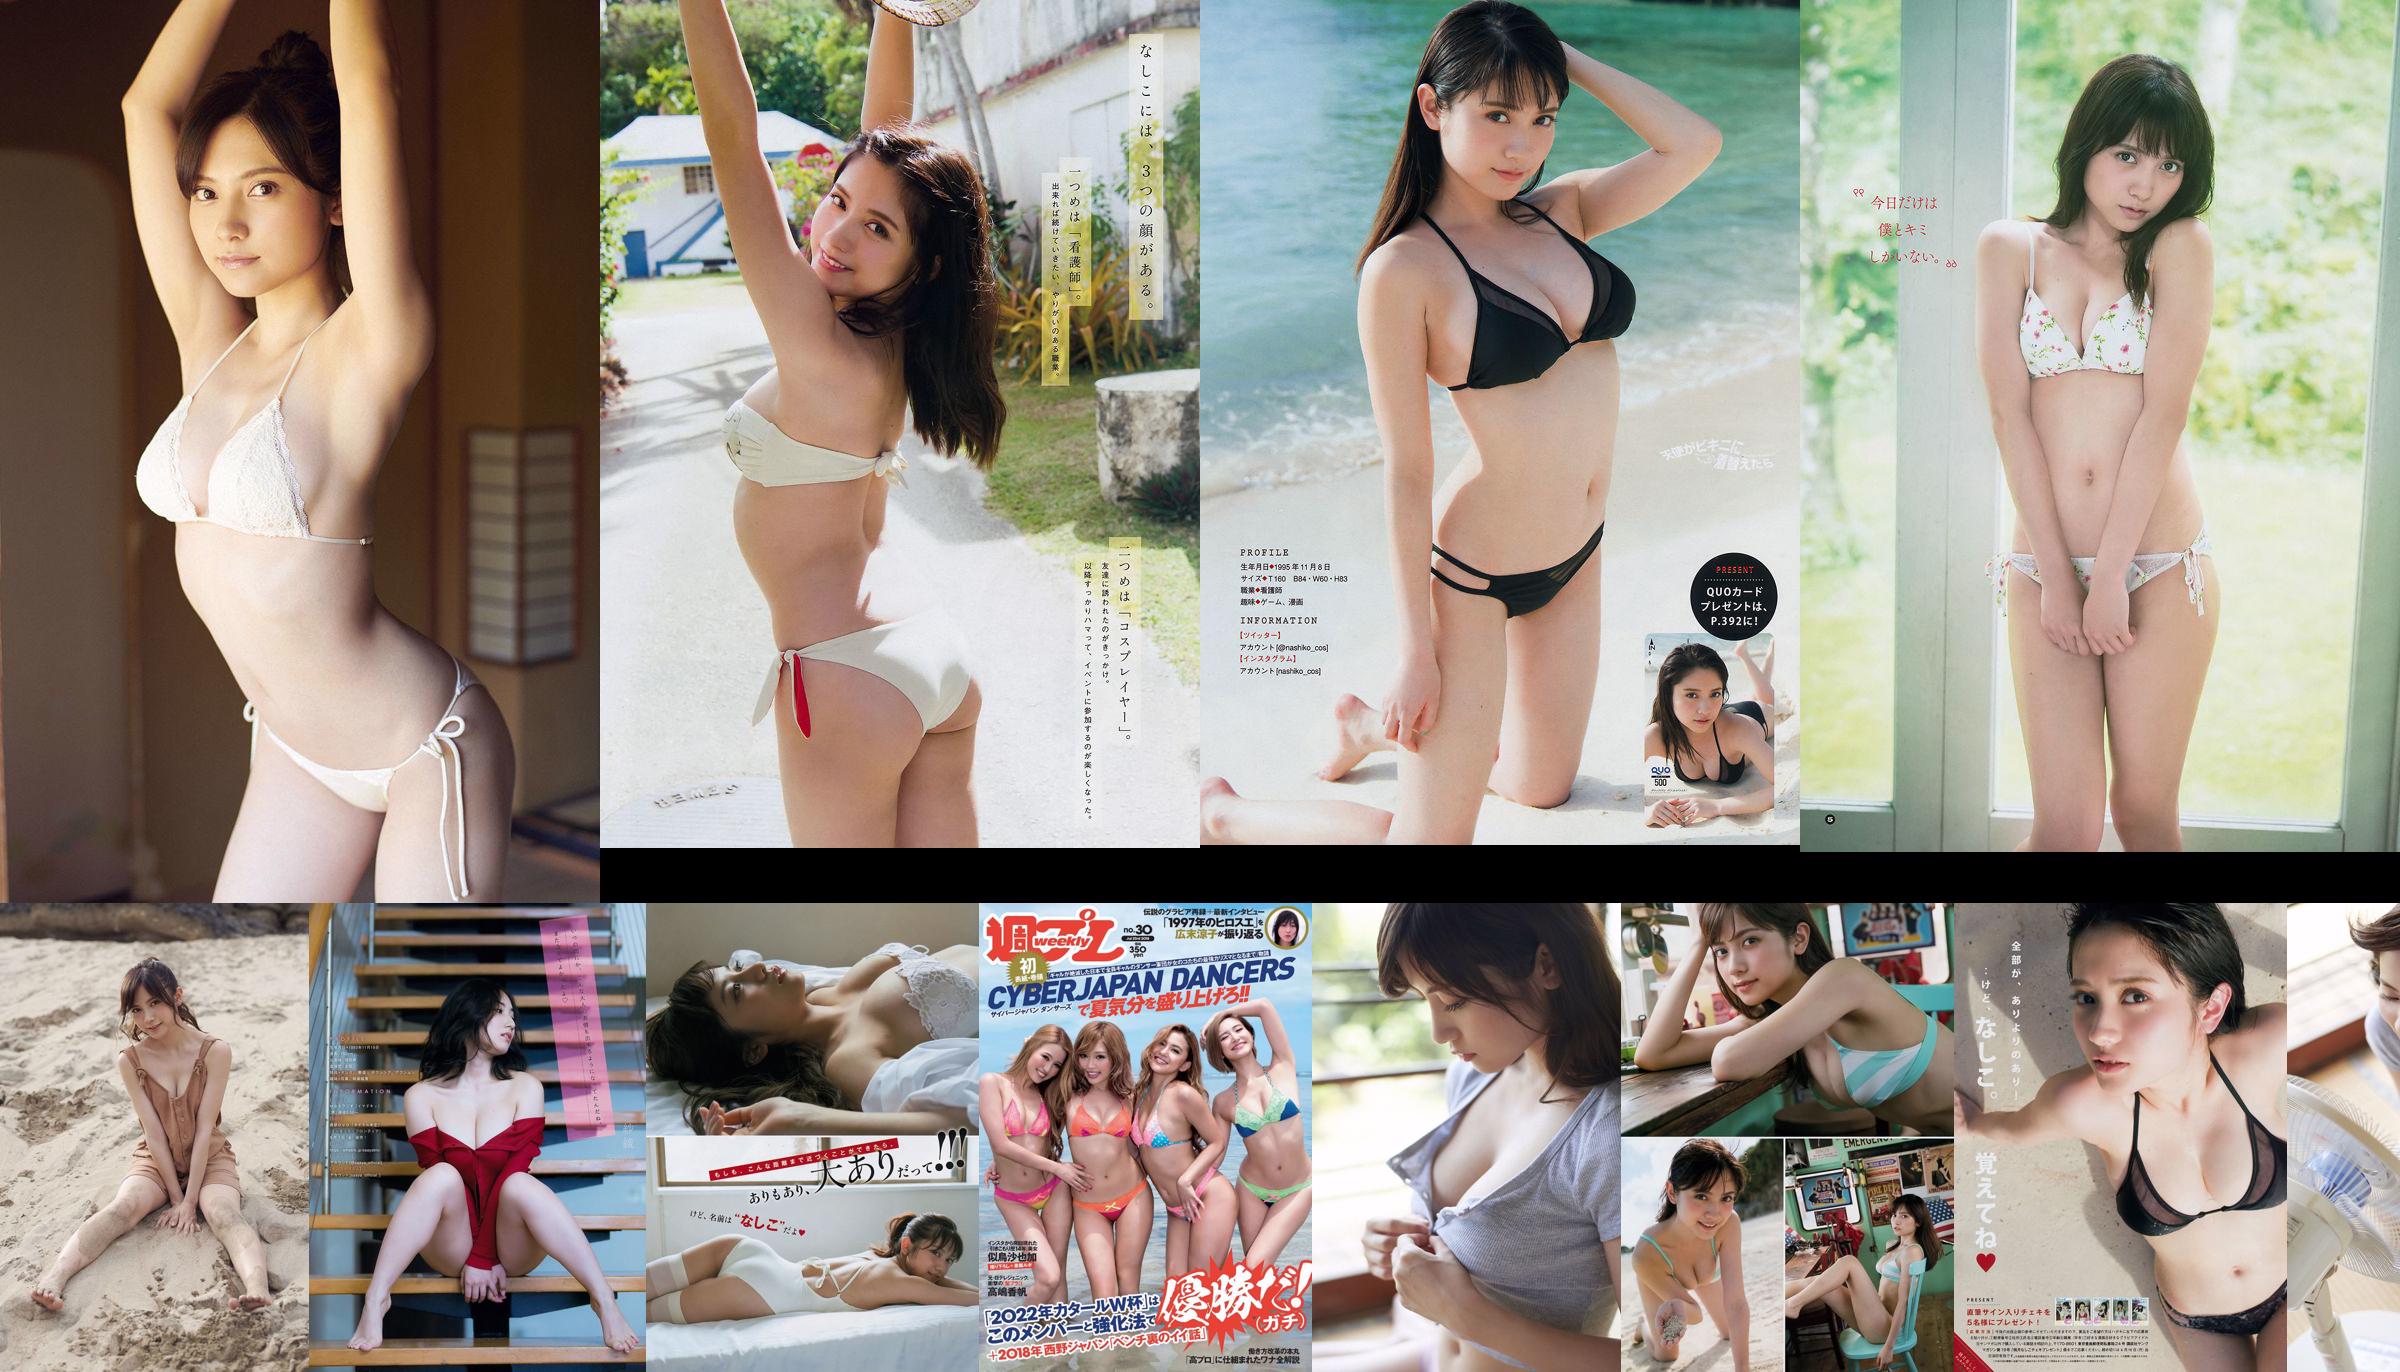 [Young Magazine] Нашико Момоцуки, фотография №19, 2018 г. No.6c520a Страница 4